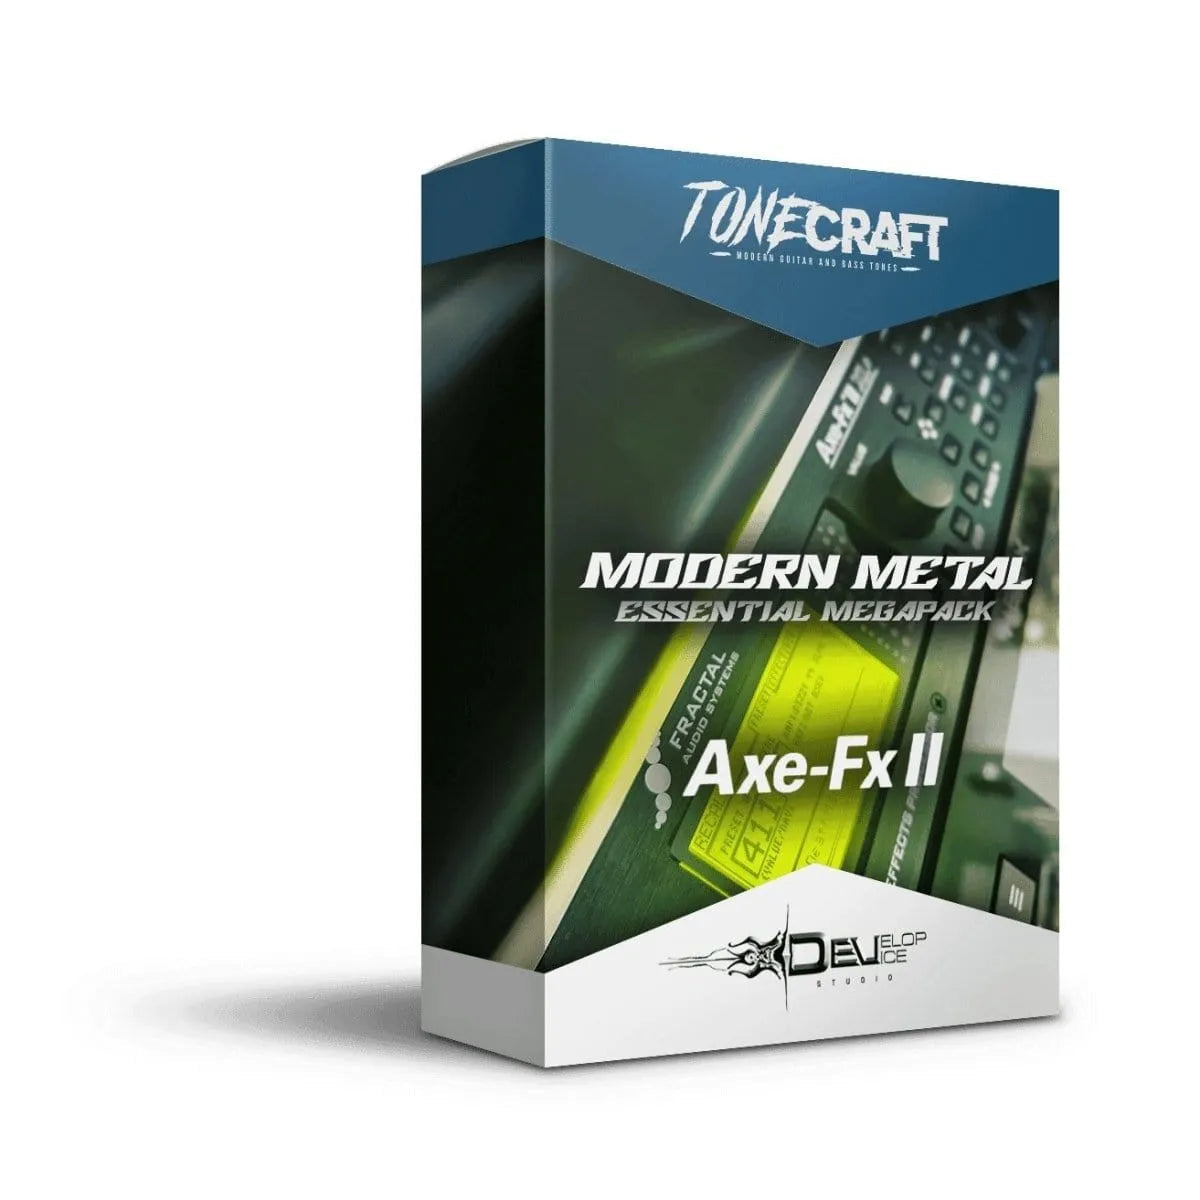 Modern Metal Essential Megapack for Fractal Axe-Fx II - Fractal Axe Fx II Presets -  Develop Device Studio